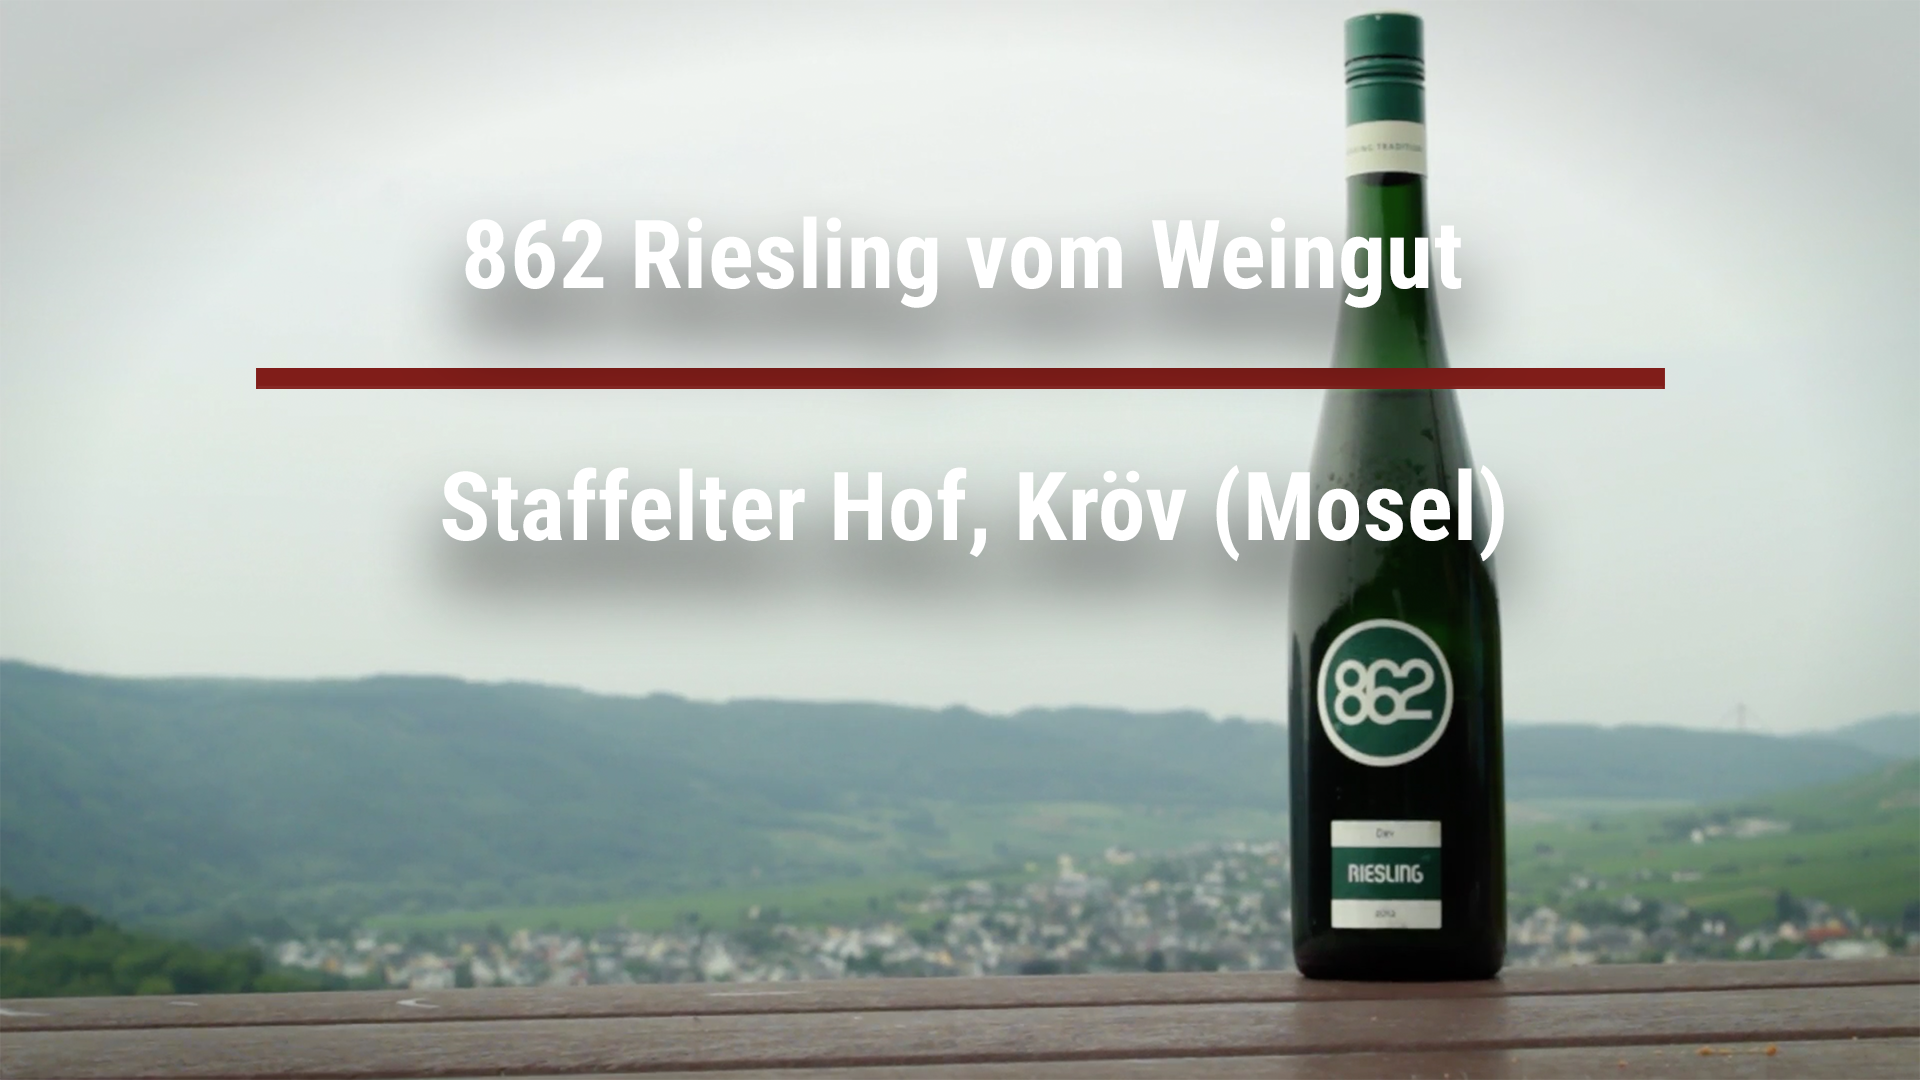 862 Riesling vom Weingut Staffelter Hof, Kröv (Mosel)